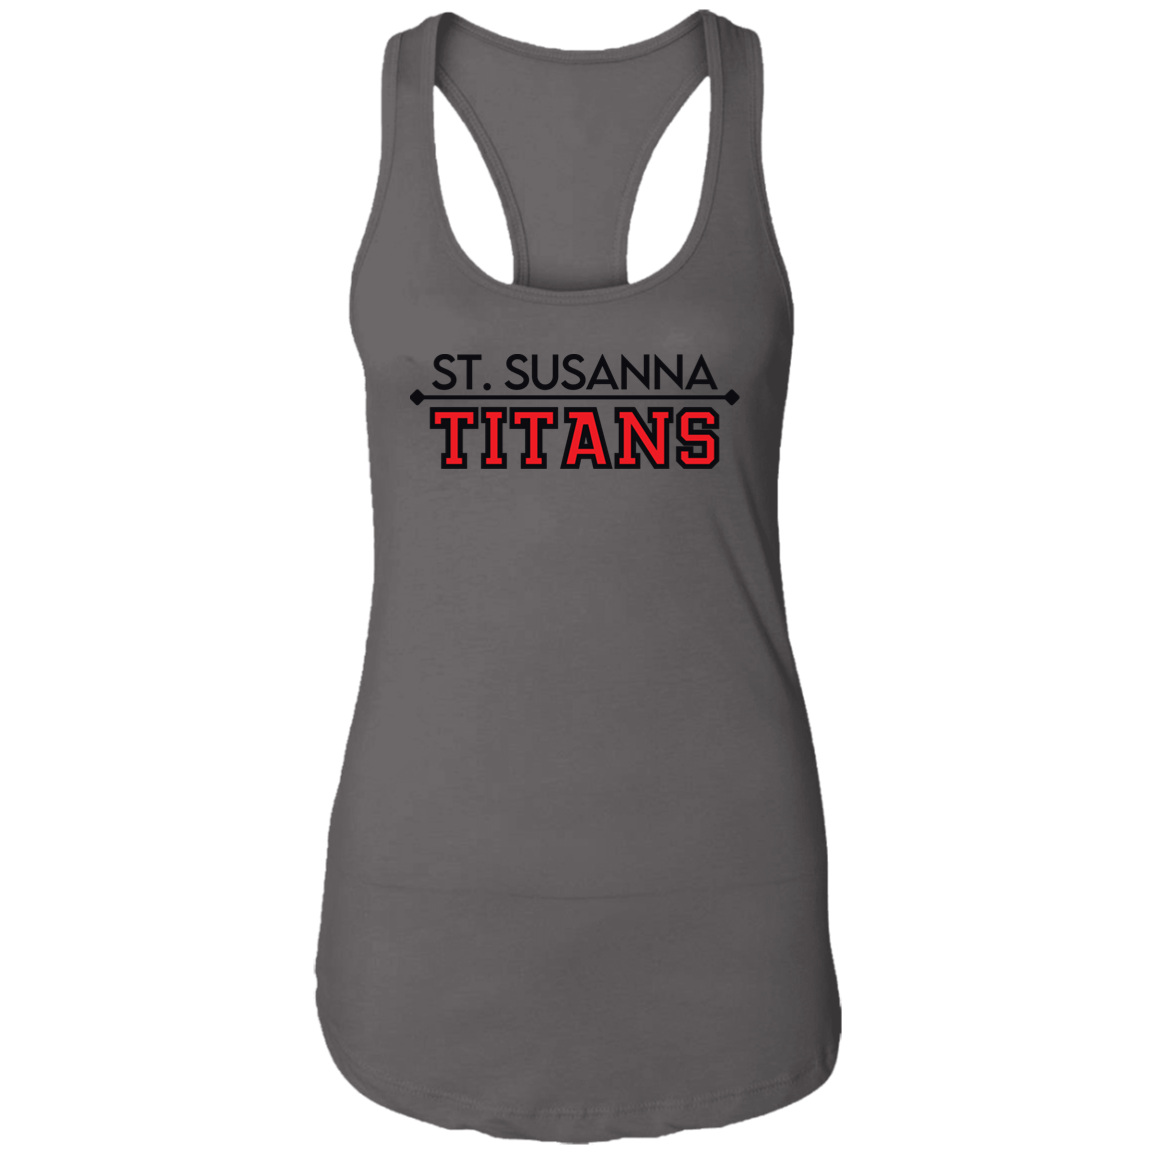 St. Susanna Titans (White / Gray) Ladies Ideal Racerback Tank